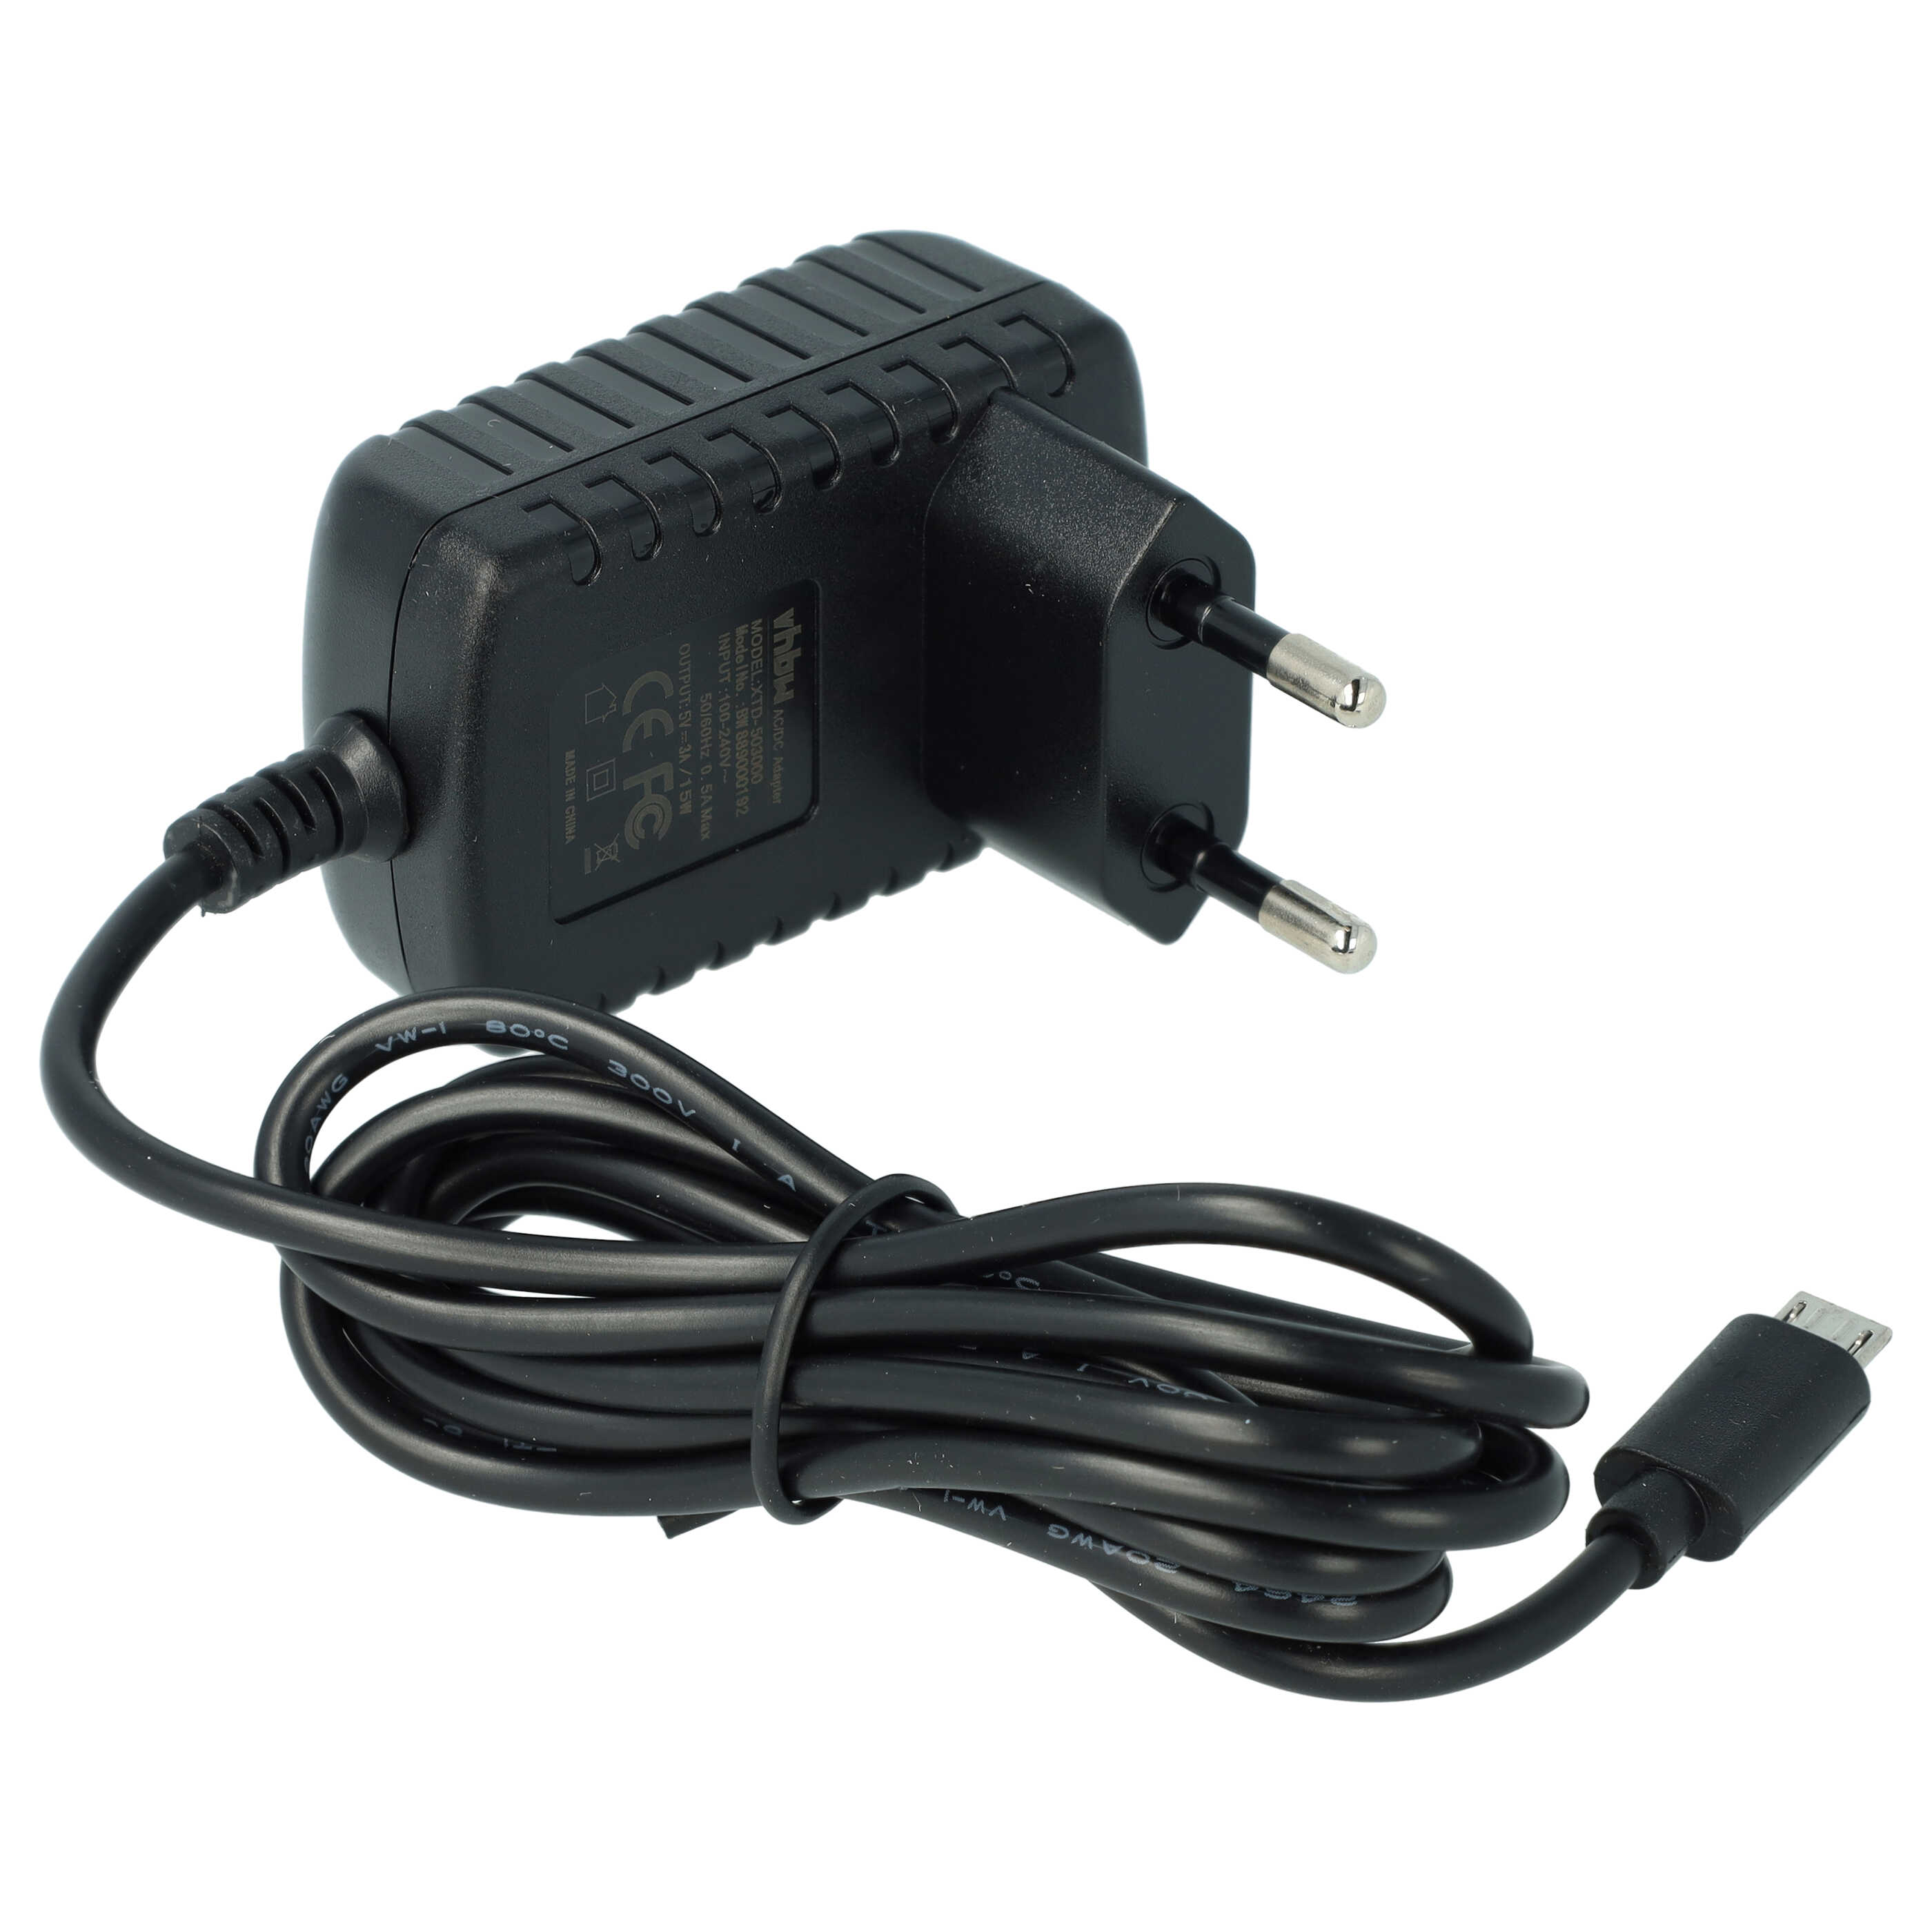 Mains Power Adapter suitable for Bose SoundLink Mini 2Soundbar